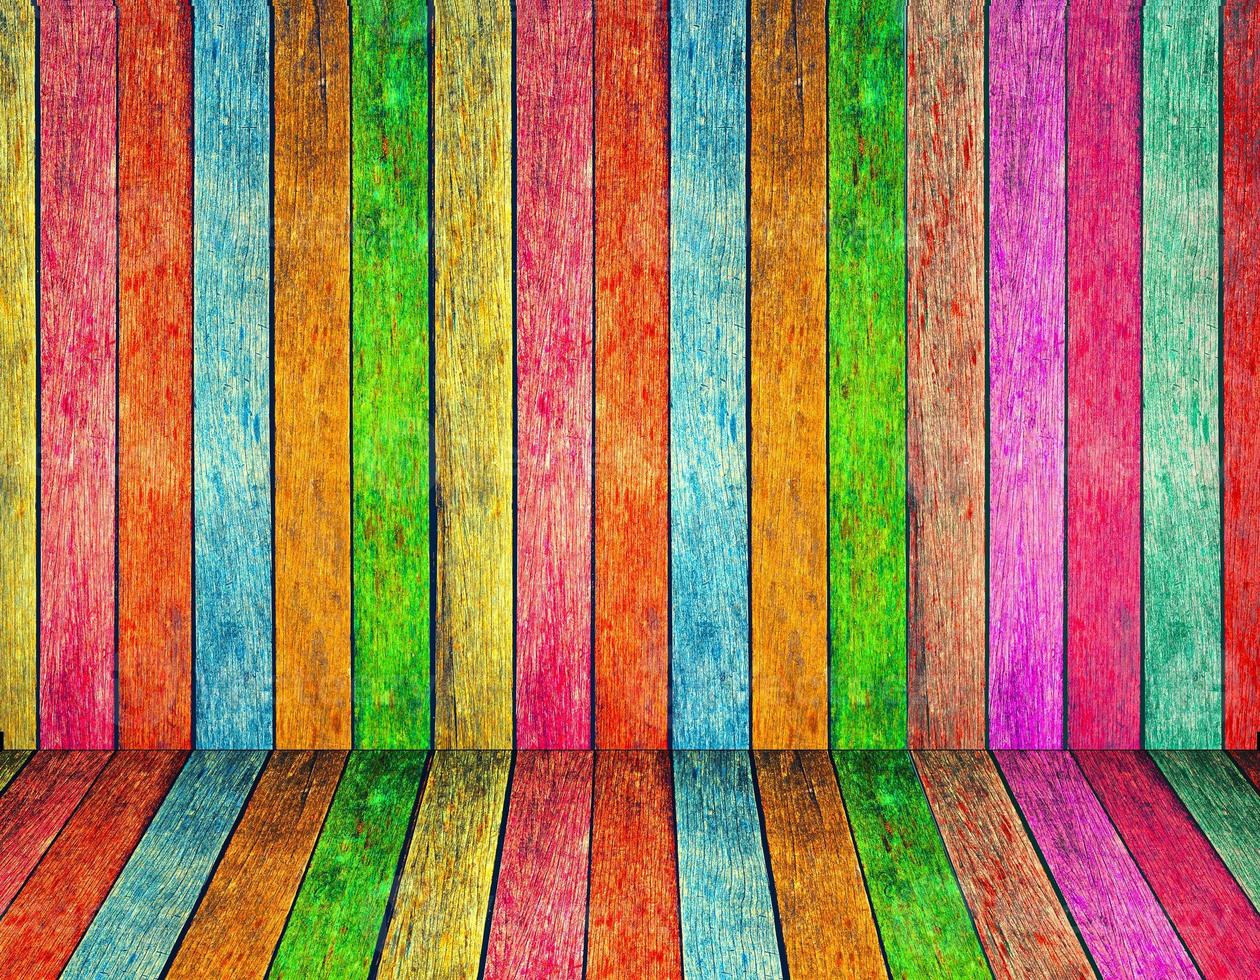 Fondo de textura de madera colorida foto